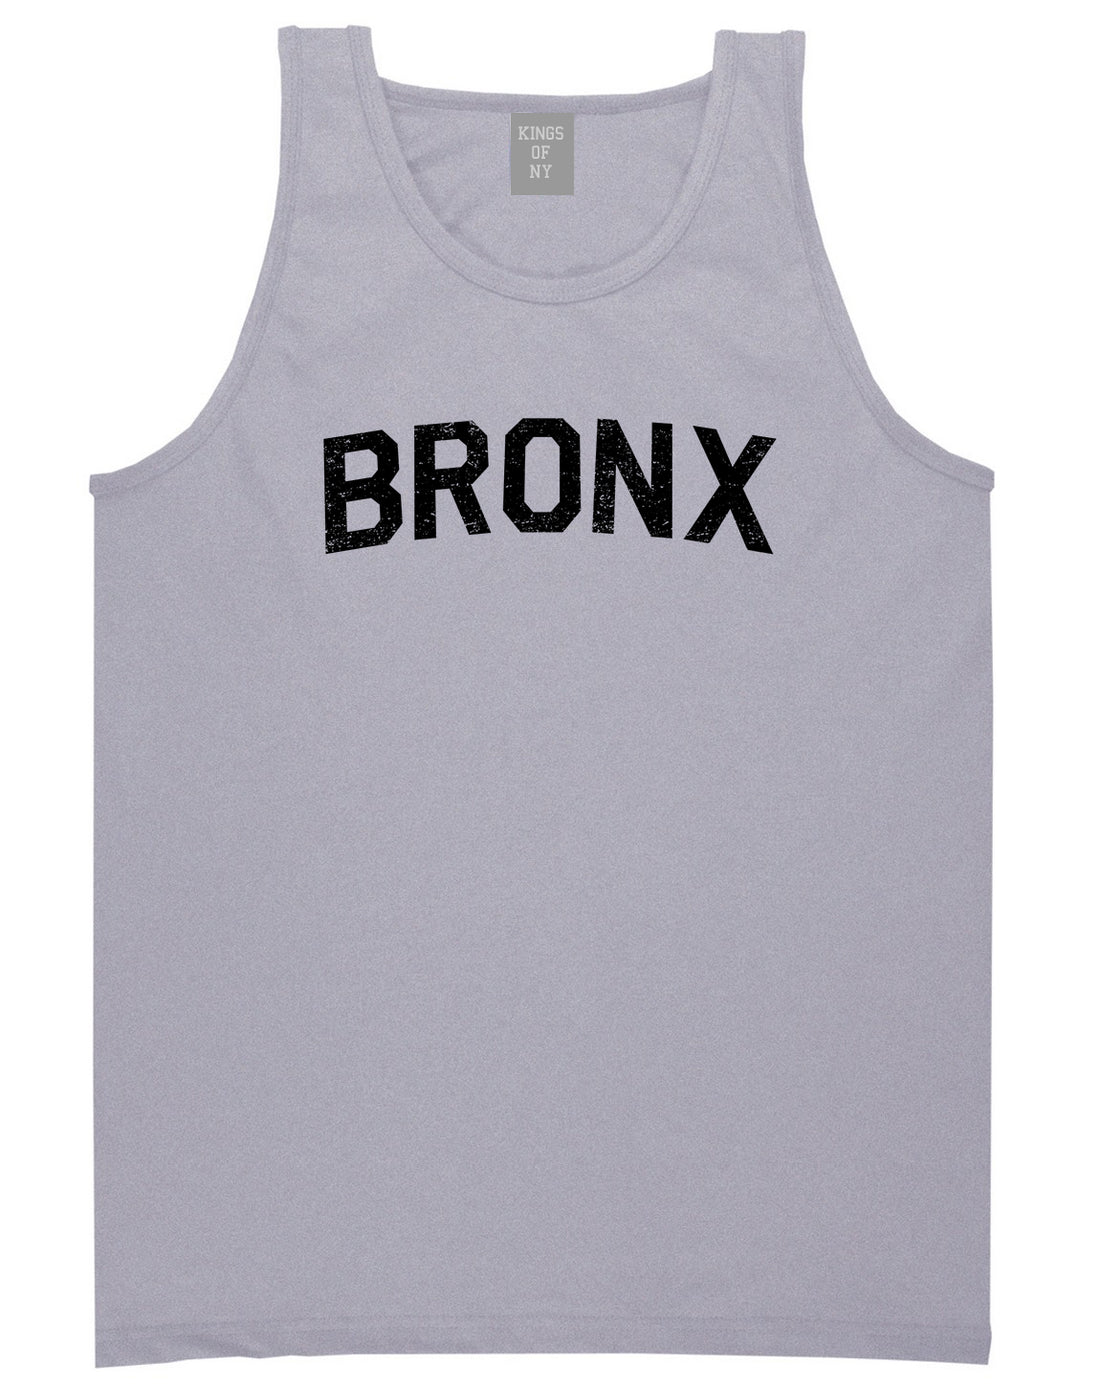 Vintage Bronx New York Mens Tank Top T-Shirt Grey